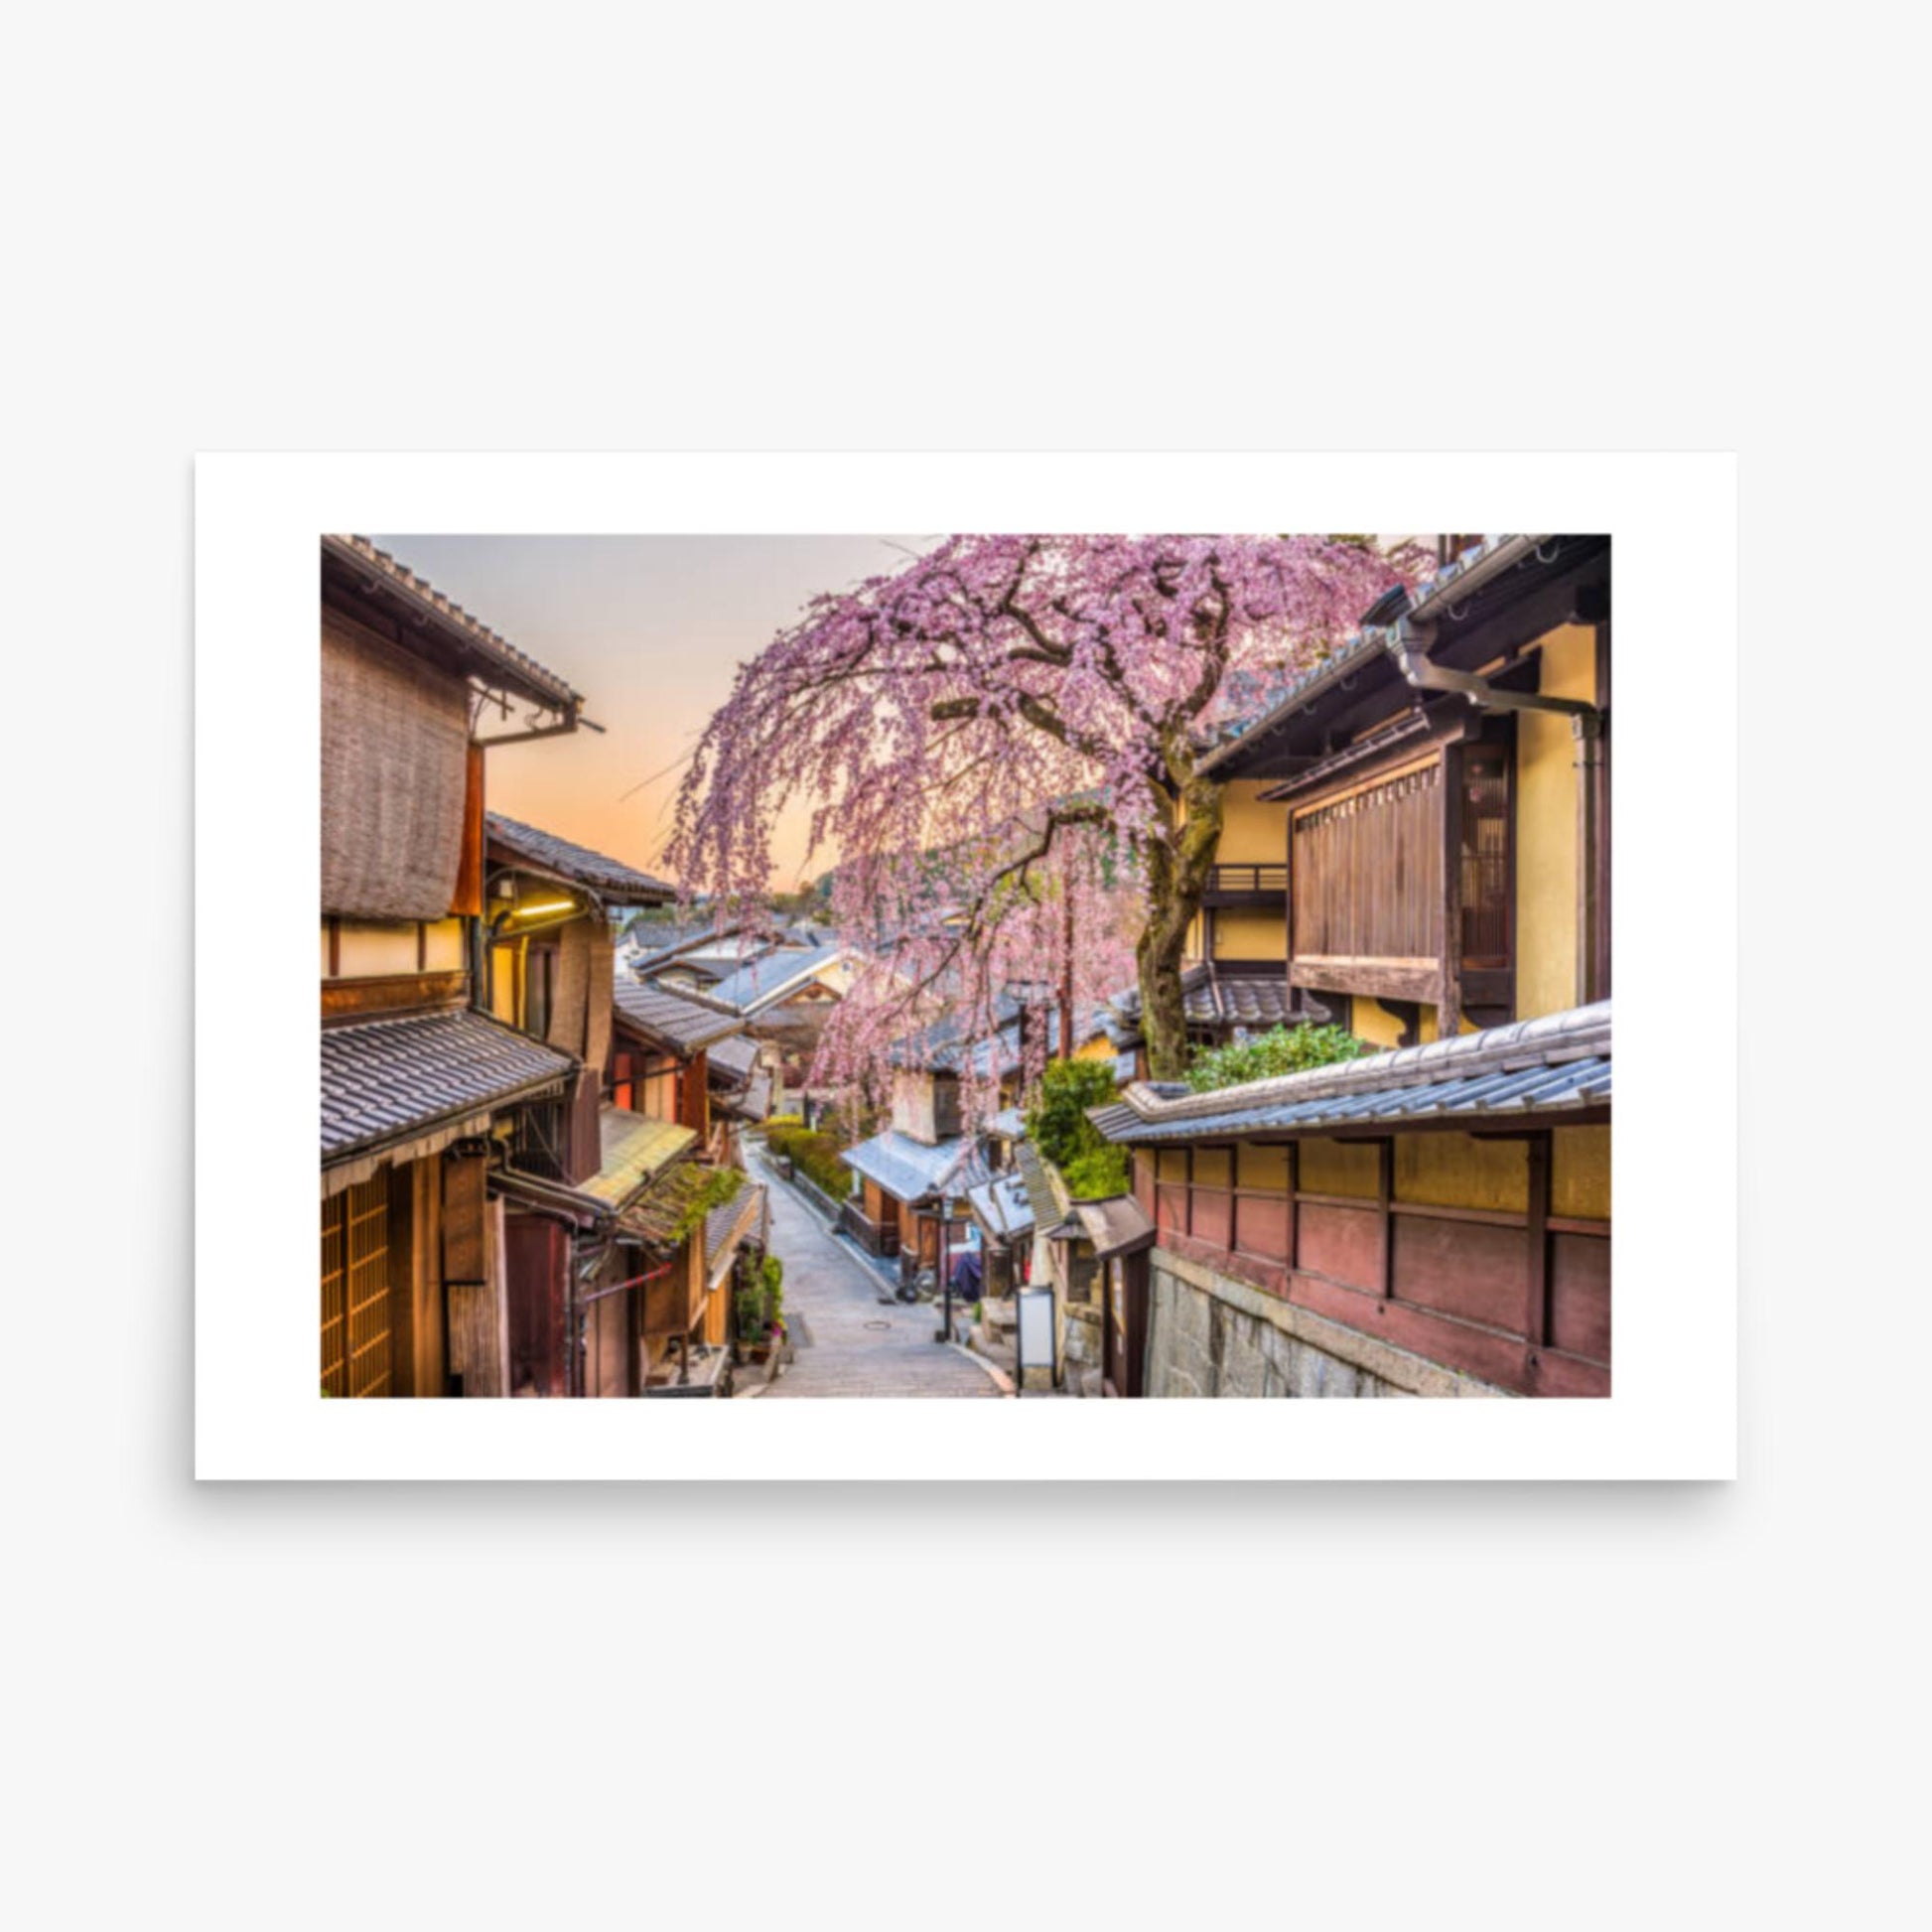 Kyoto, Japan in Sprint 24x36 in Poster